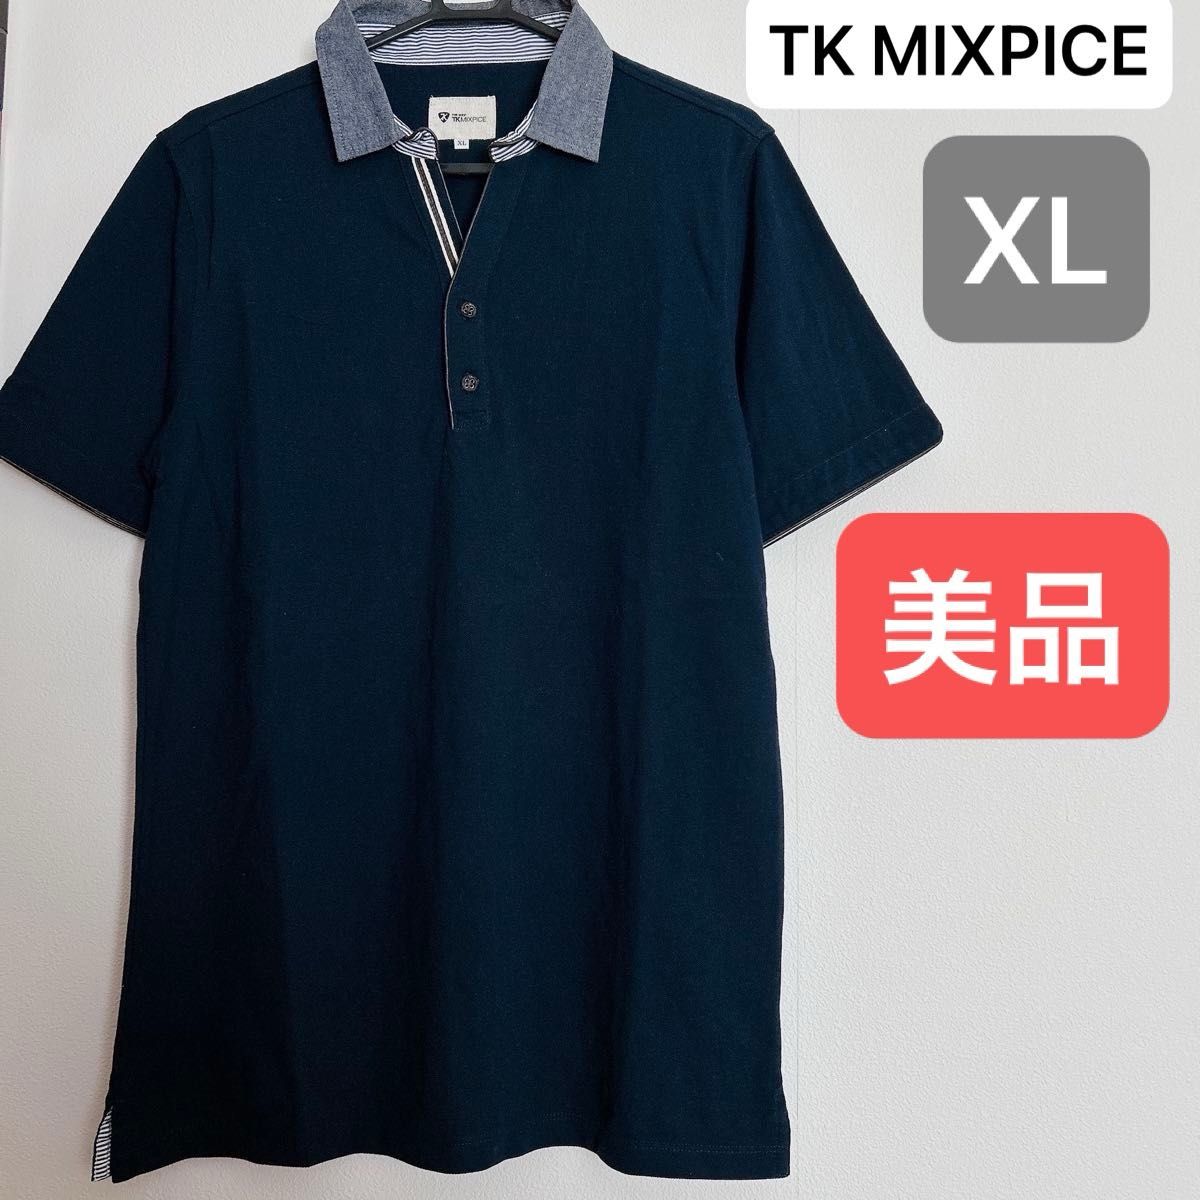 pm516.7 TK MIXPICE サイズXL タケオキクチ ネイビー 半袖ポロシャツ 紺色 メンズ トップス スキッパー 夏服